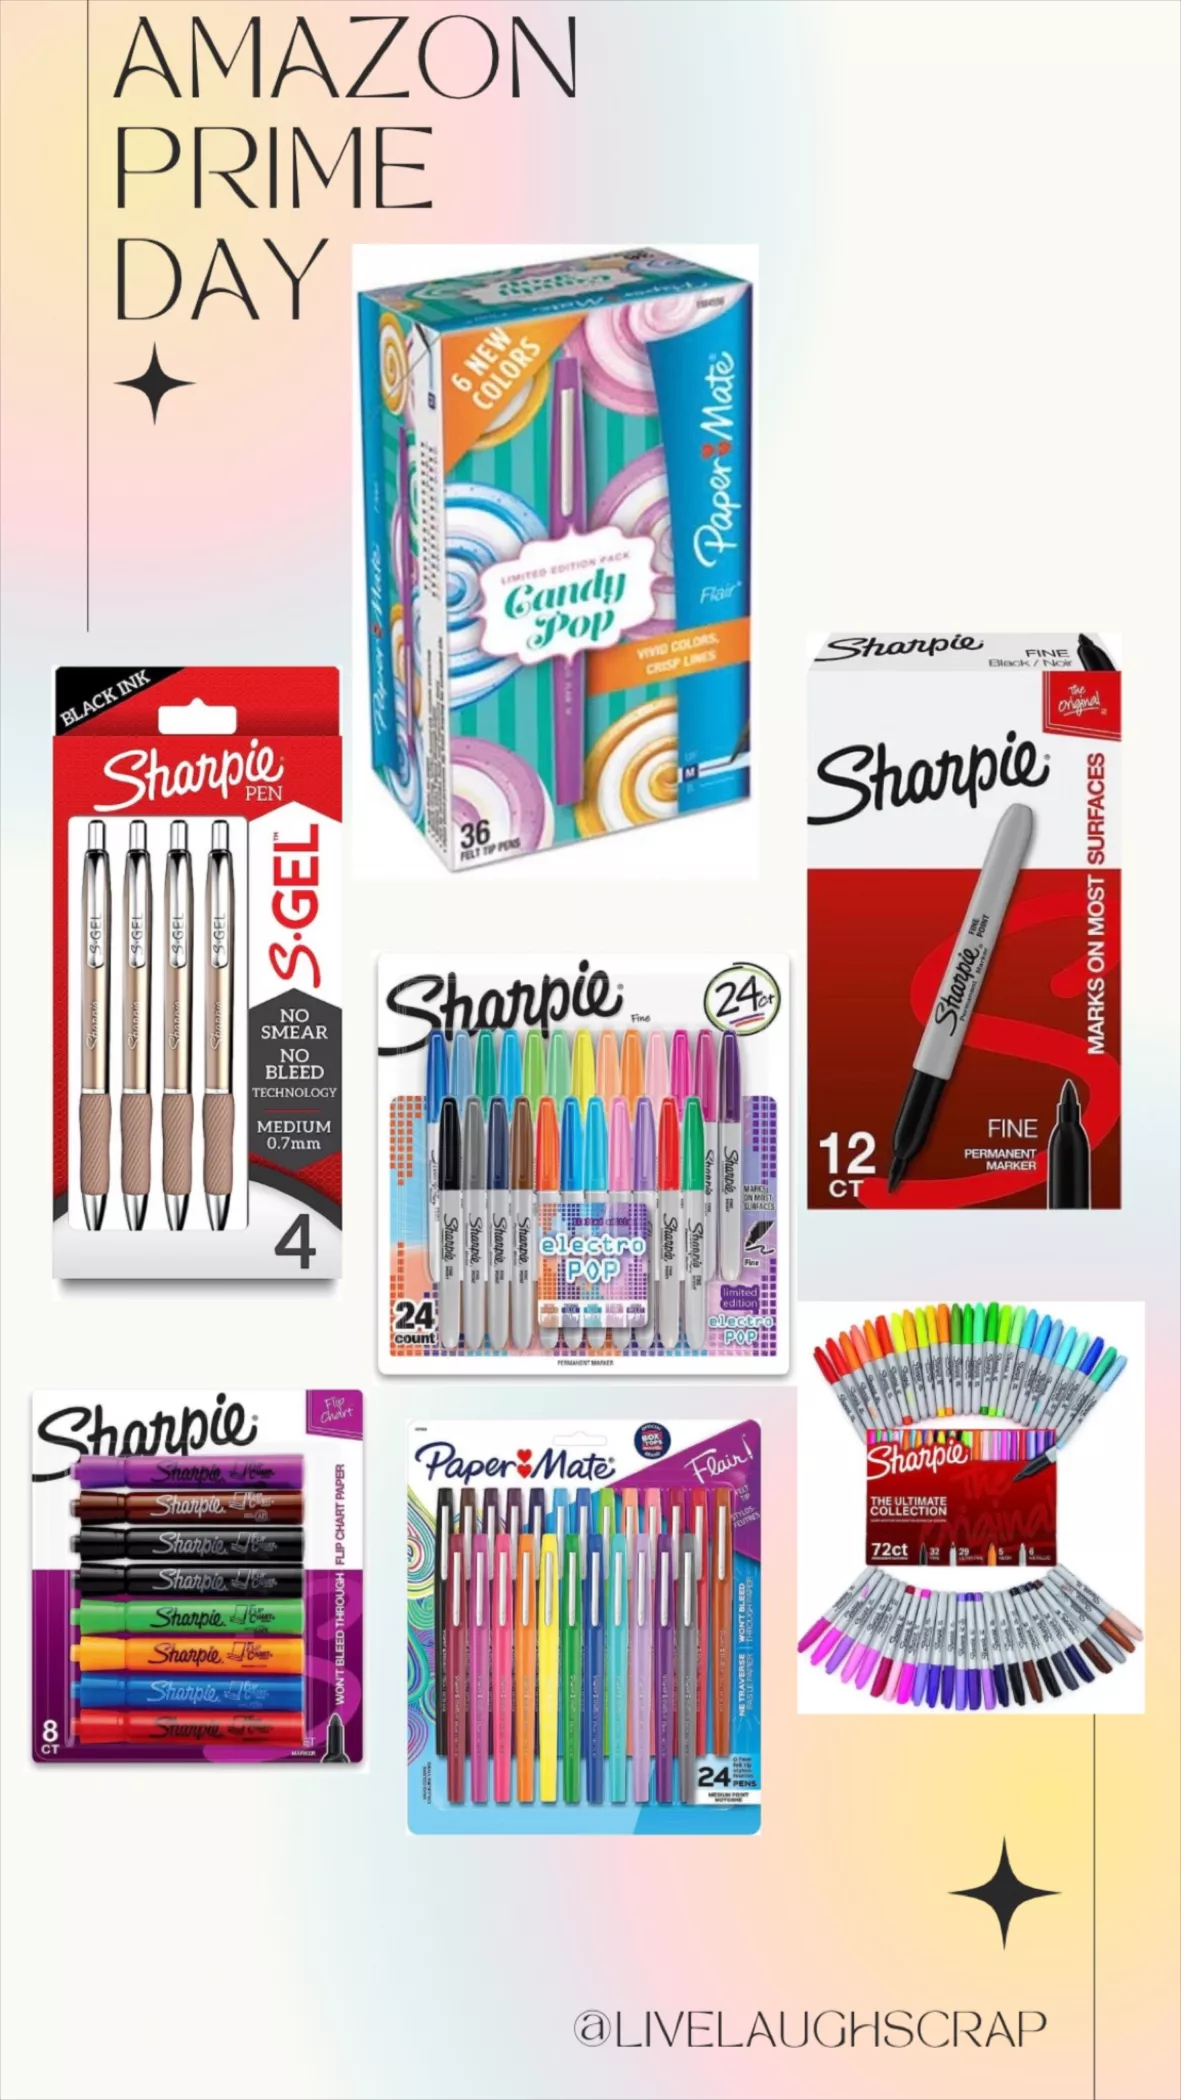  Mr Pen- Felt Tip Pens, 16 Pack, Colored Felt Tip Pens, Marker  Pens, Felt Pens, Felt Tip Markers, Felt Markers, Felt Tip Pens Assorted  Colors, Felt Tip Marker Pens, Felt